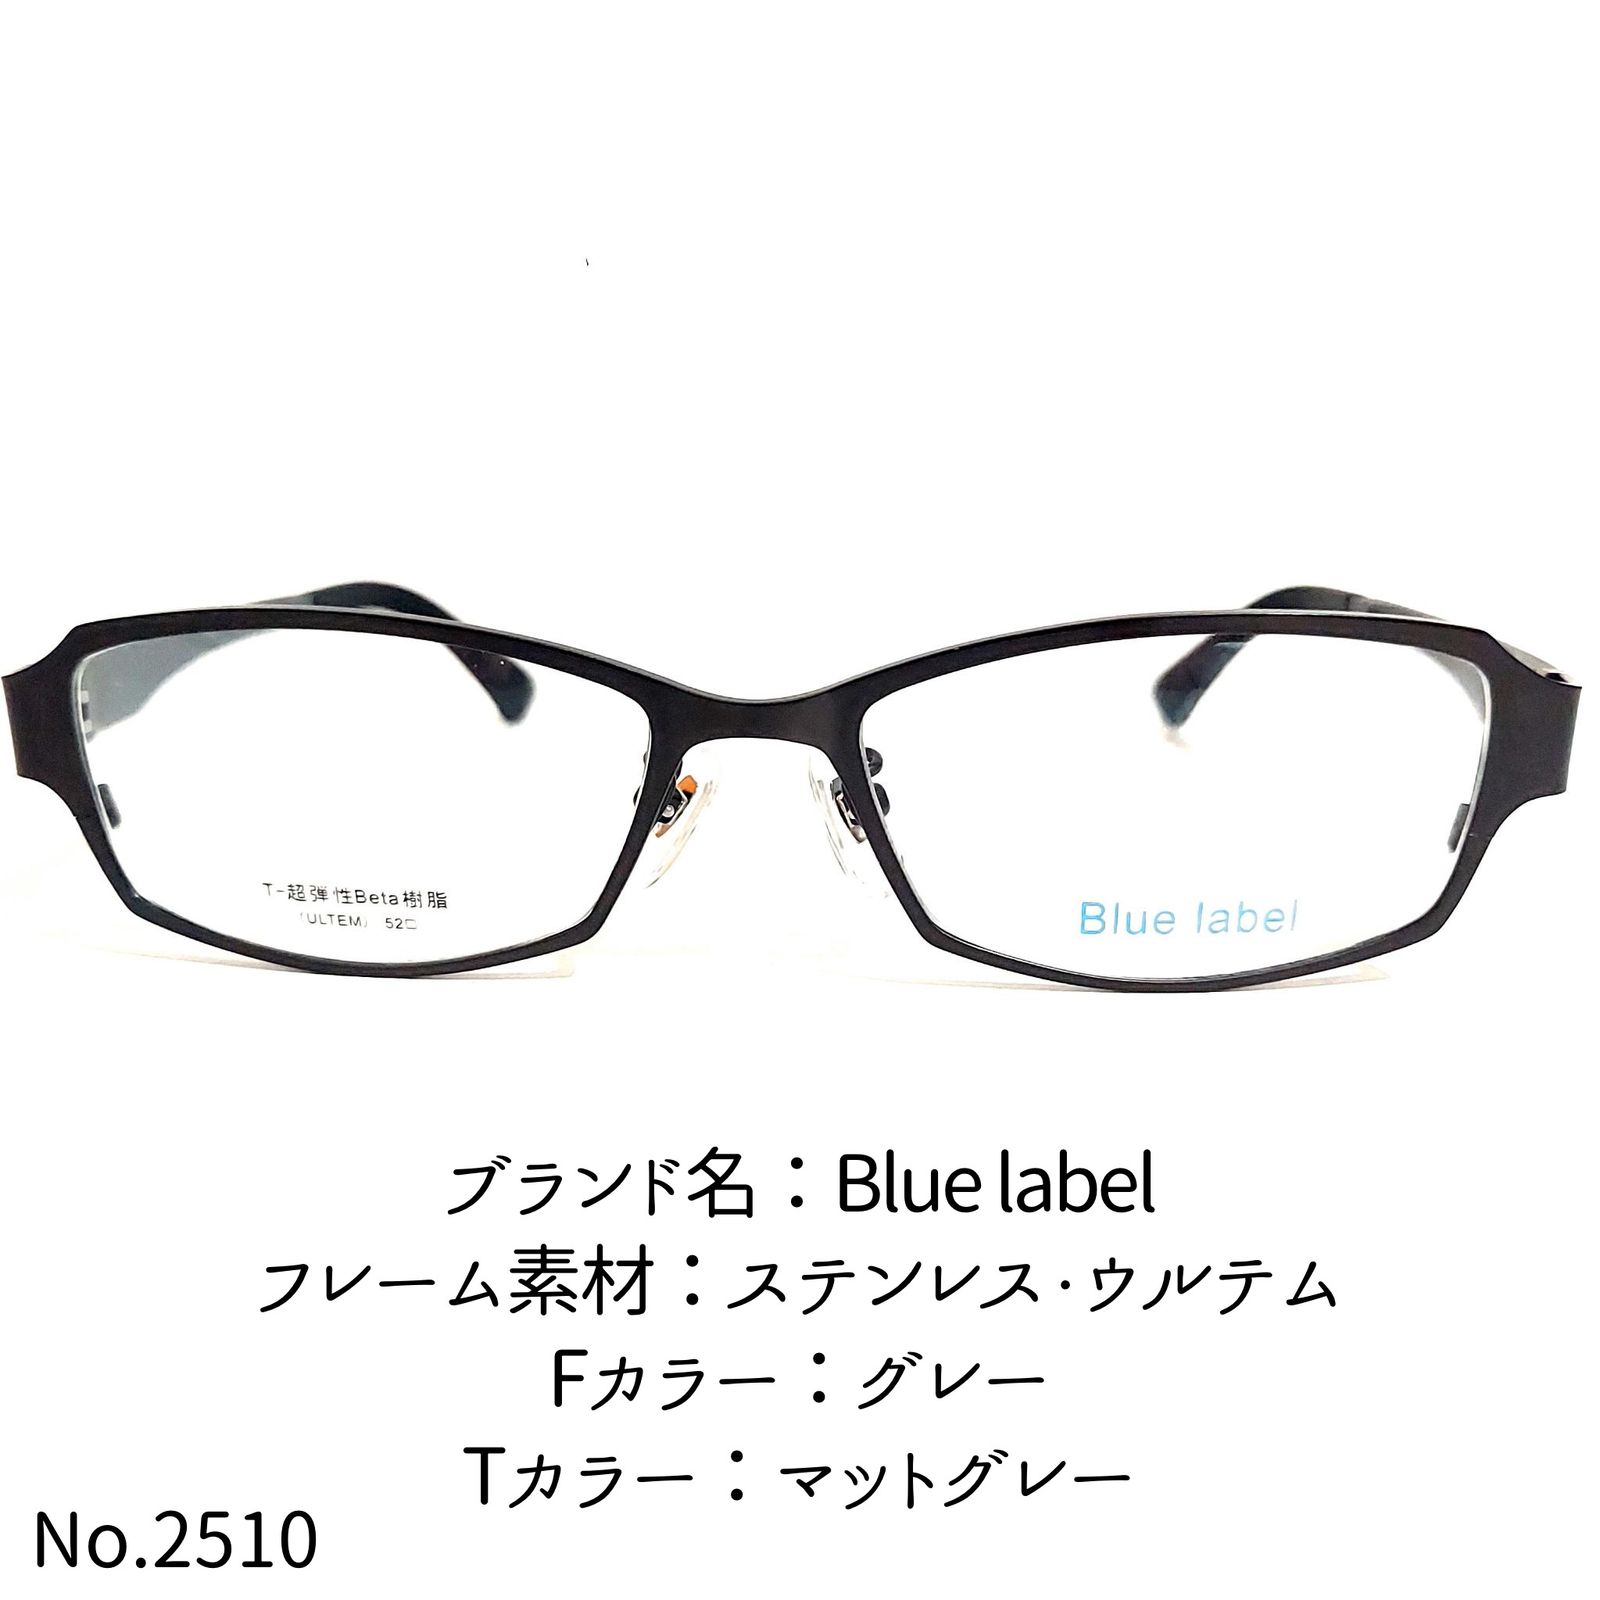 No.2510-メガネ Blue label【フレームのみ価格】 - スッキリ生活専門店